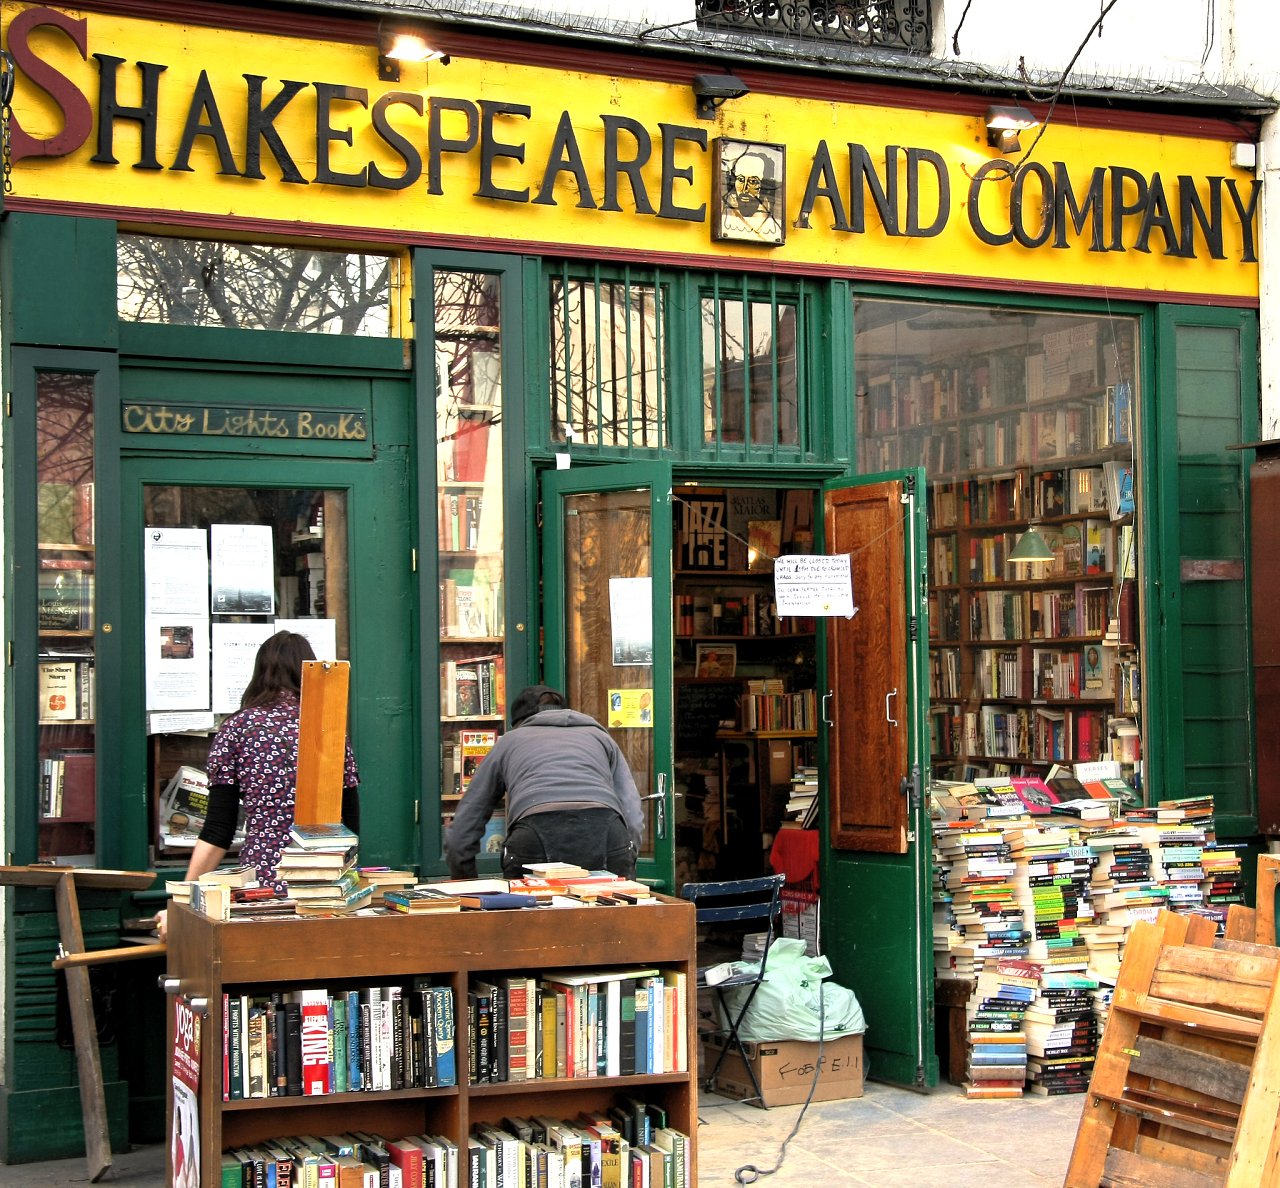 Shakespeare & Company bookshop, Paris, France 2